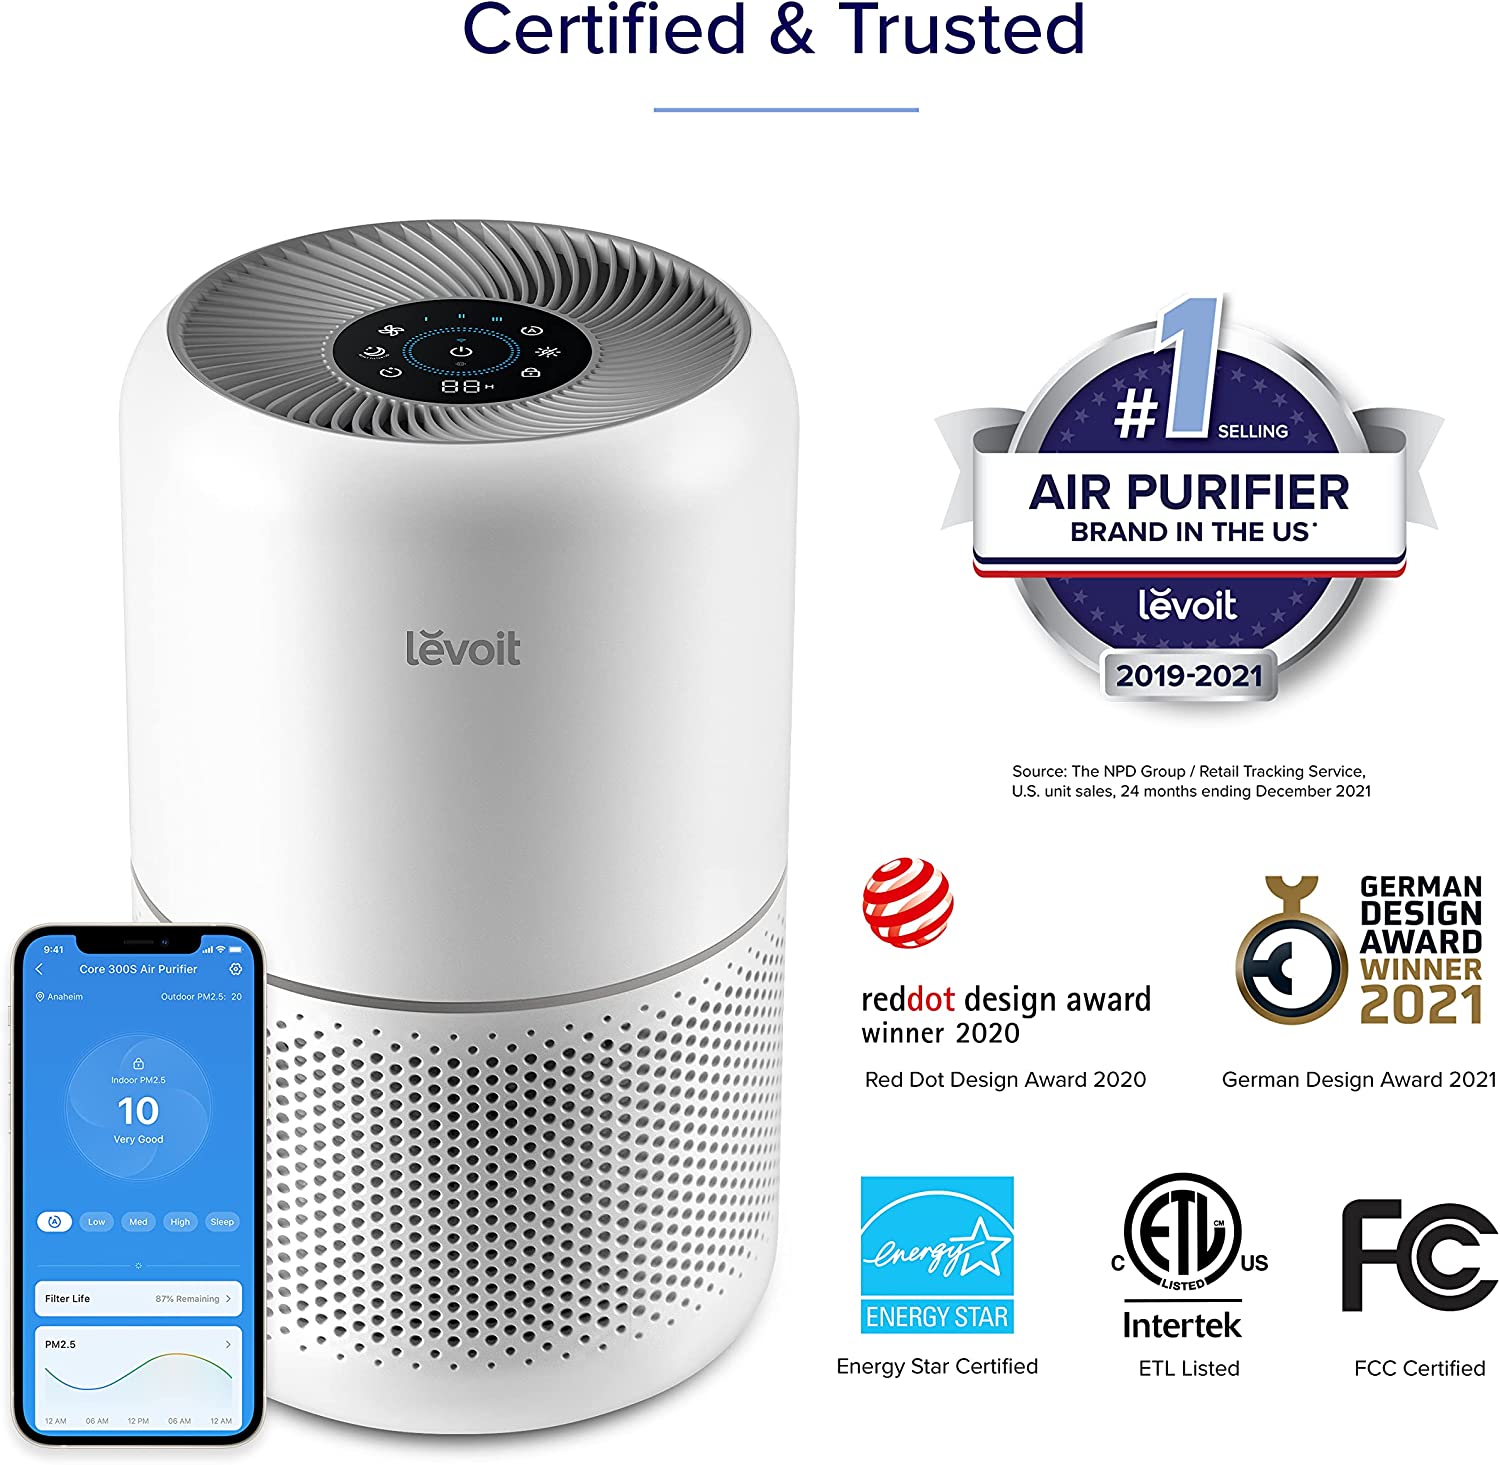 دستگاه تصفیه هوا LEVOIT Smart Air Purifier for Home Bedroom- ارسال 10 الی 15 روز کاری